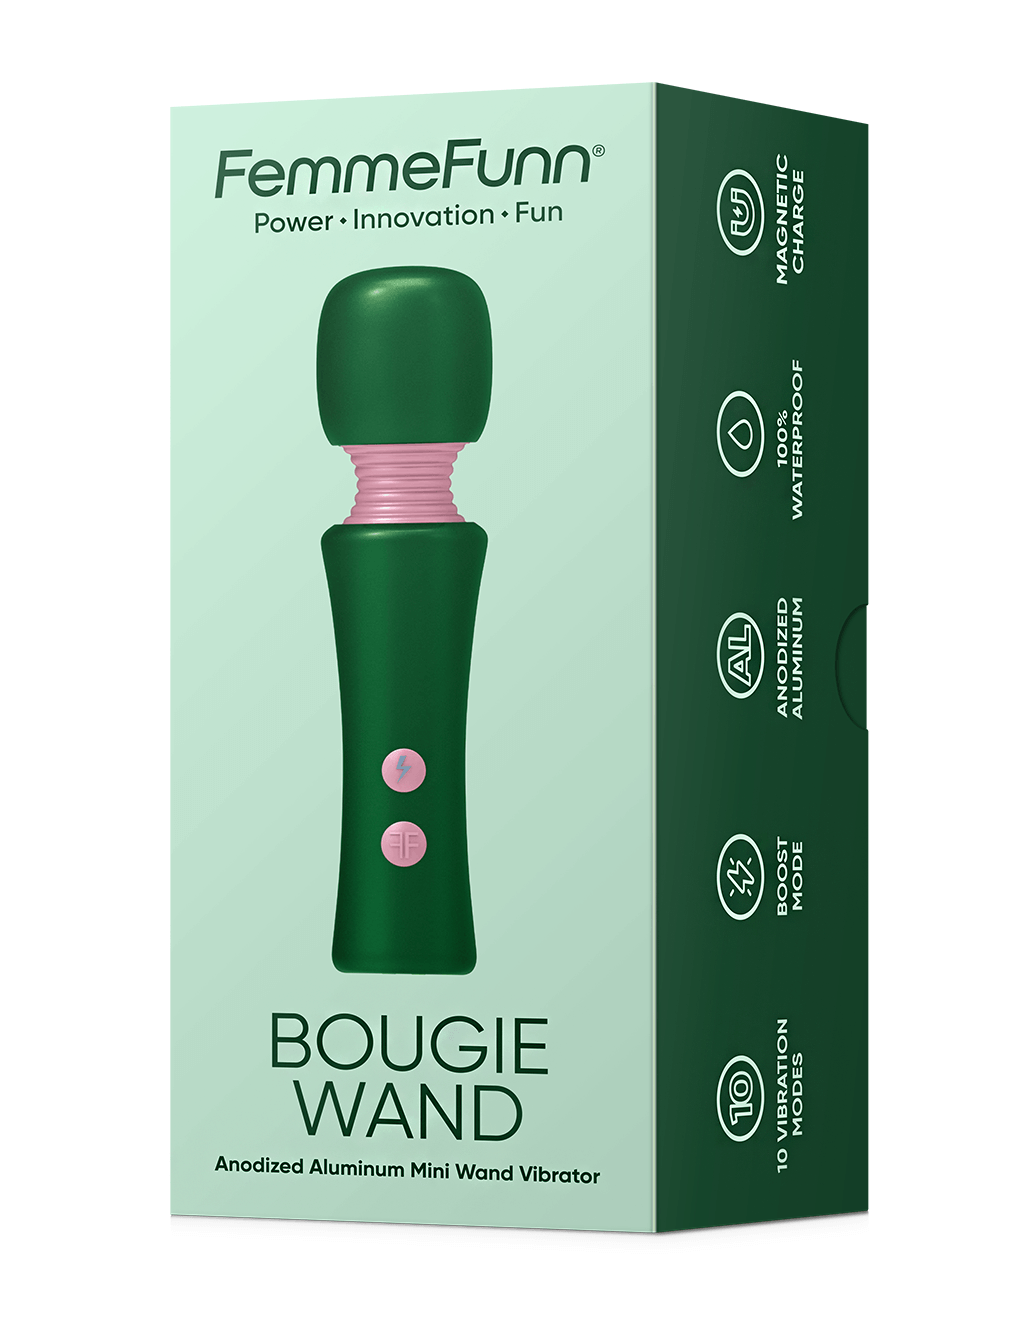 Femme Funn Bougie Wand - Green - Box